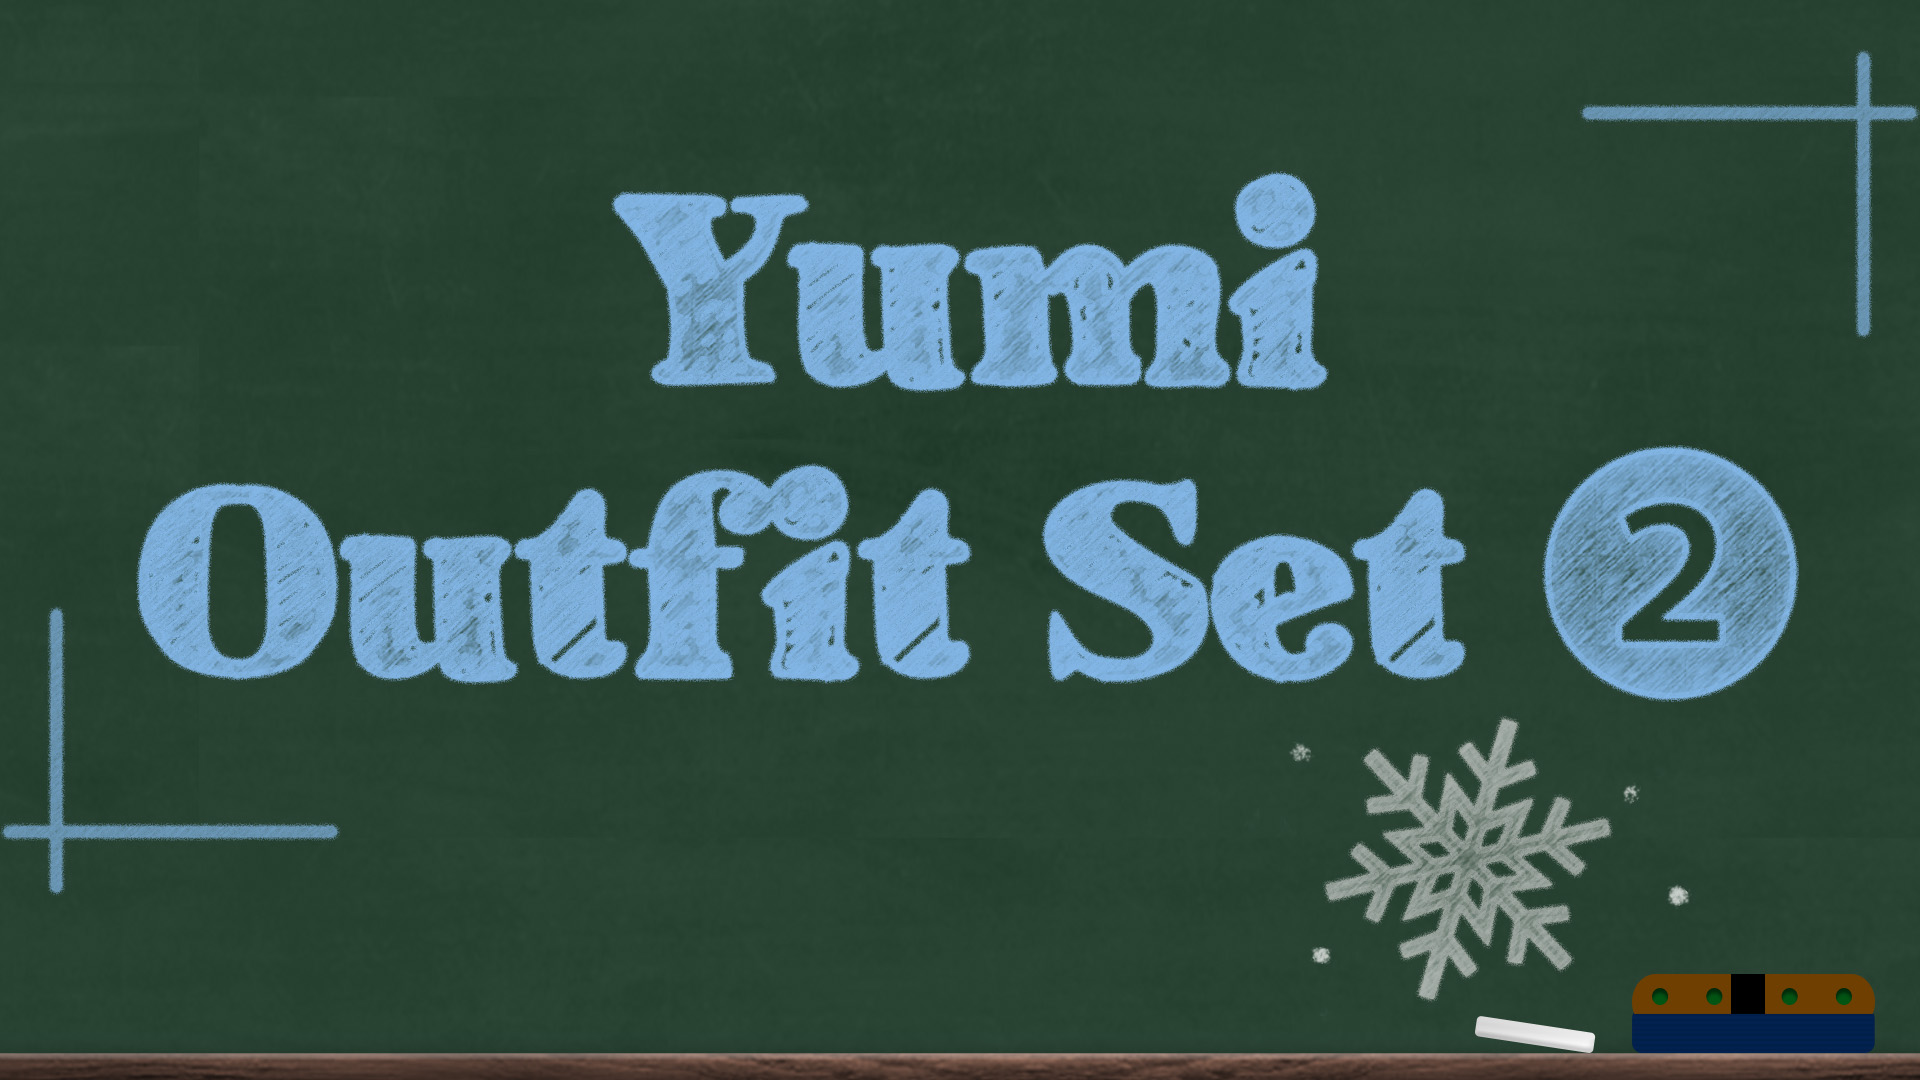 Yumi Outfit Set 2